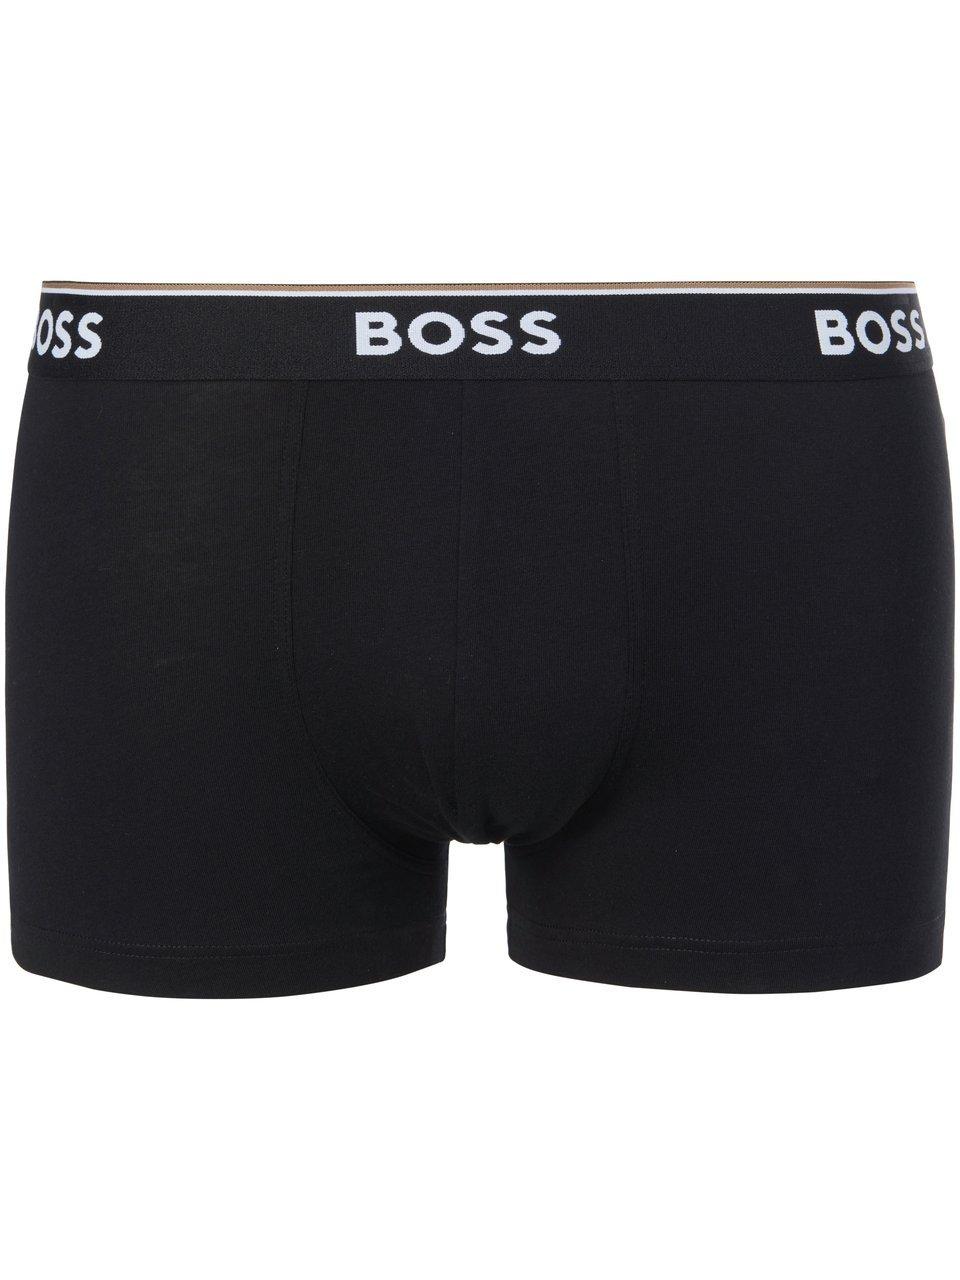 BOSS - Boxershort